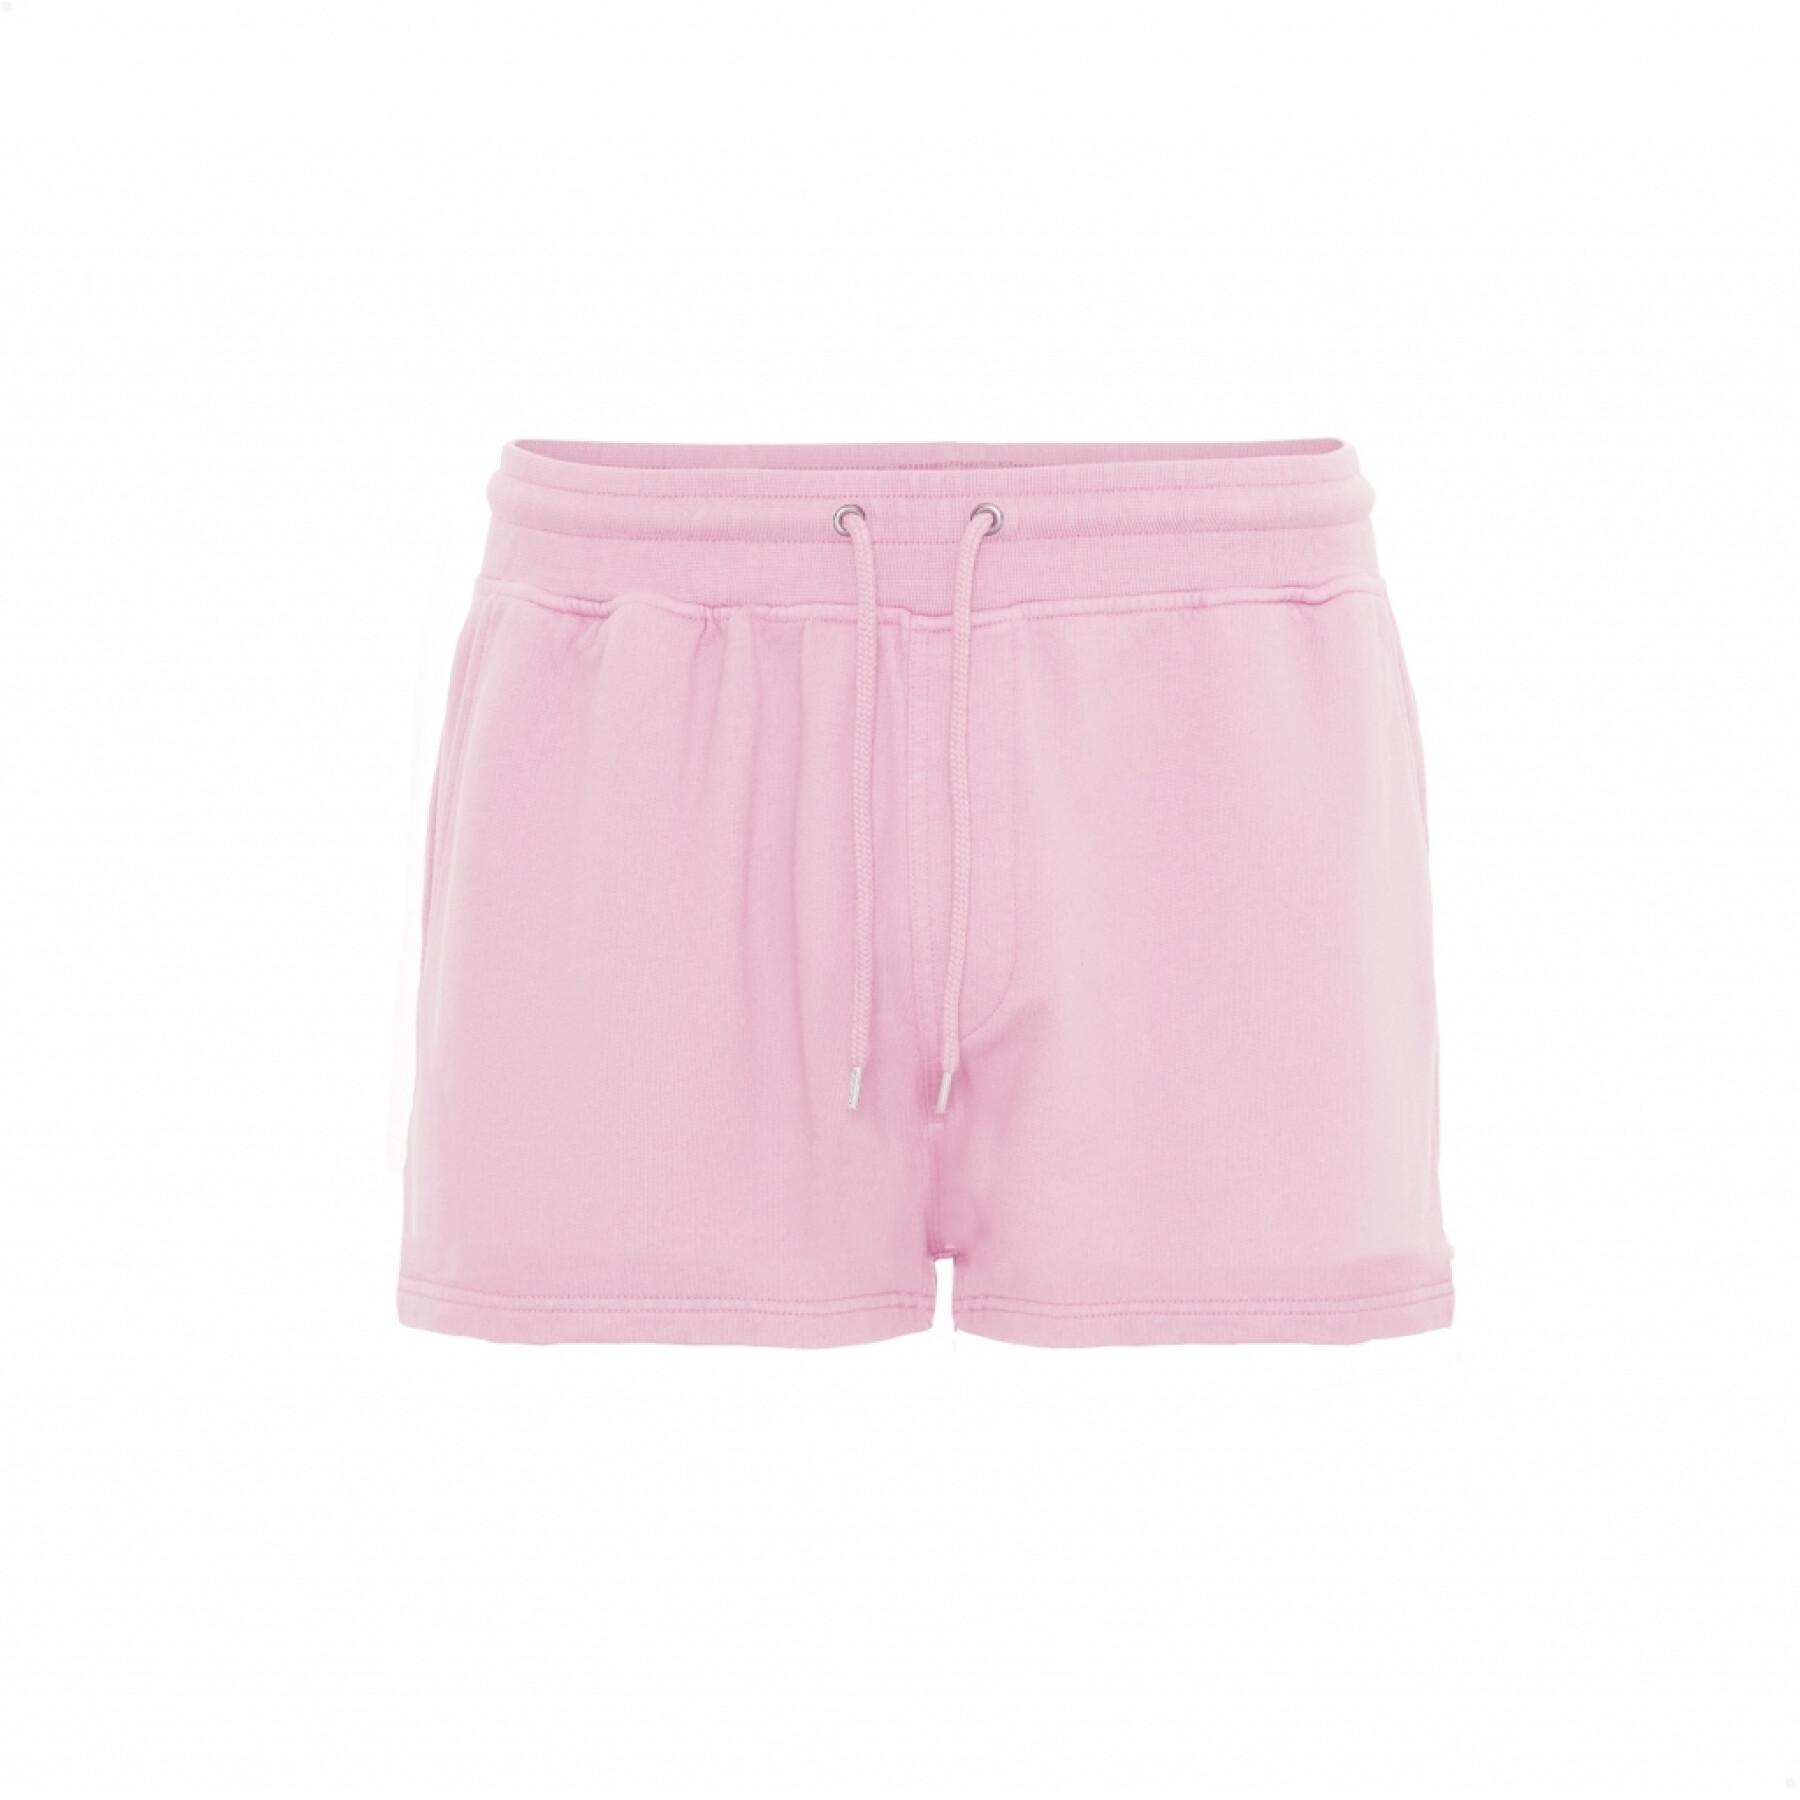 Women's shorts Colorful Standard Organic flamingo pink